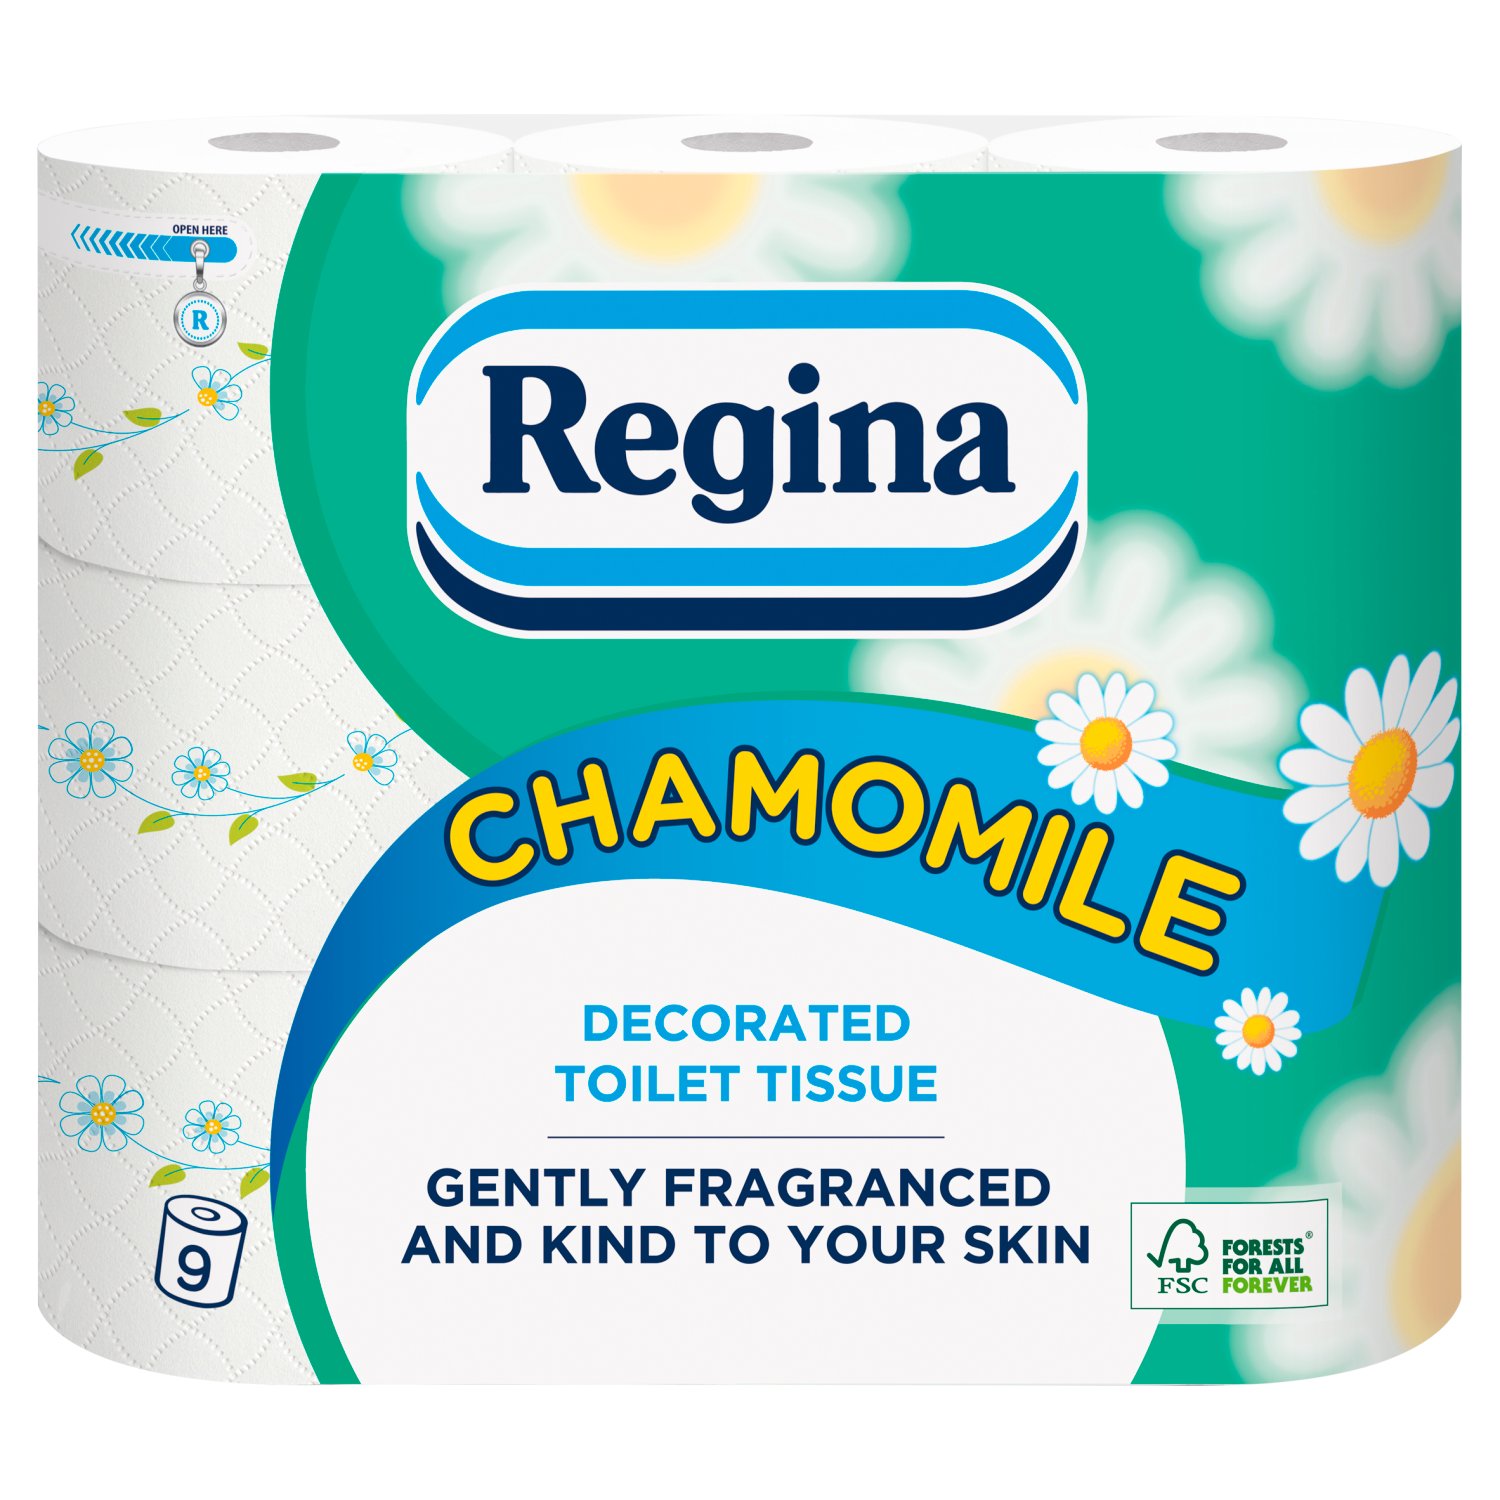 Regina Chamomile Soft Quilted Toilet Tissue 9 Rolls (9 Roll)